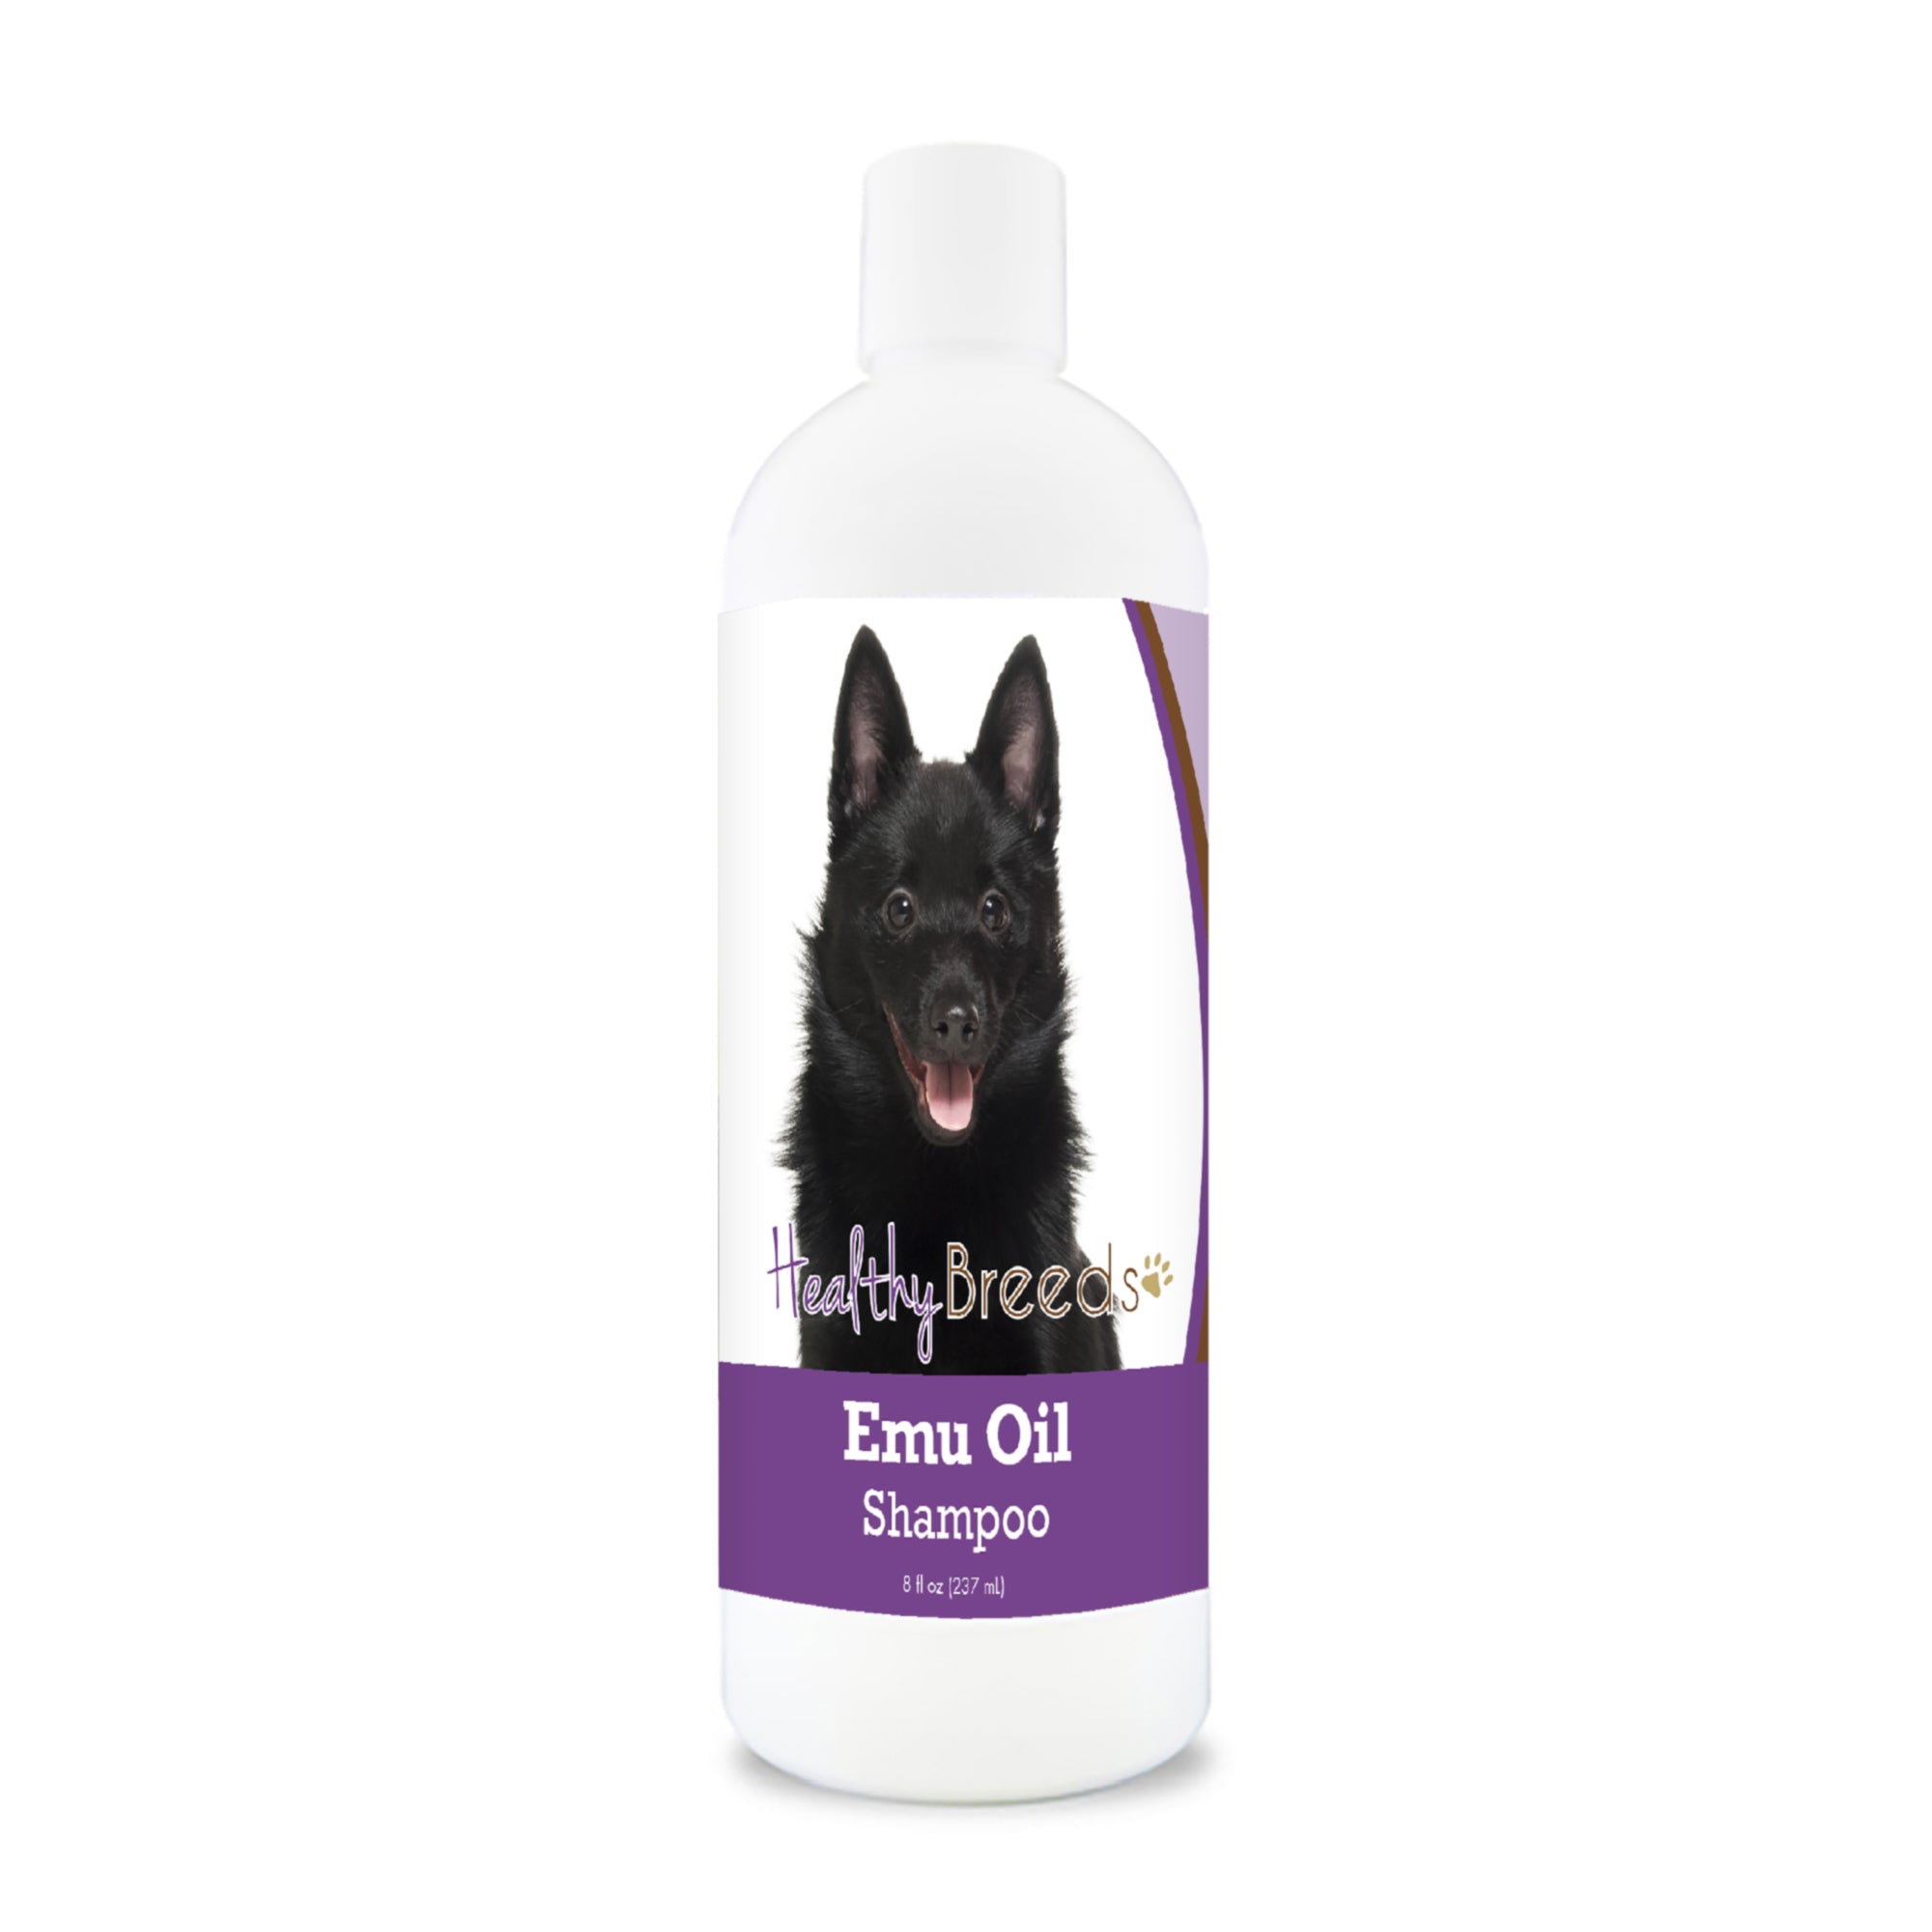 Schipperke Emu Oil Shampoo 8 oz